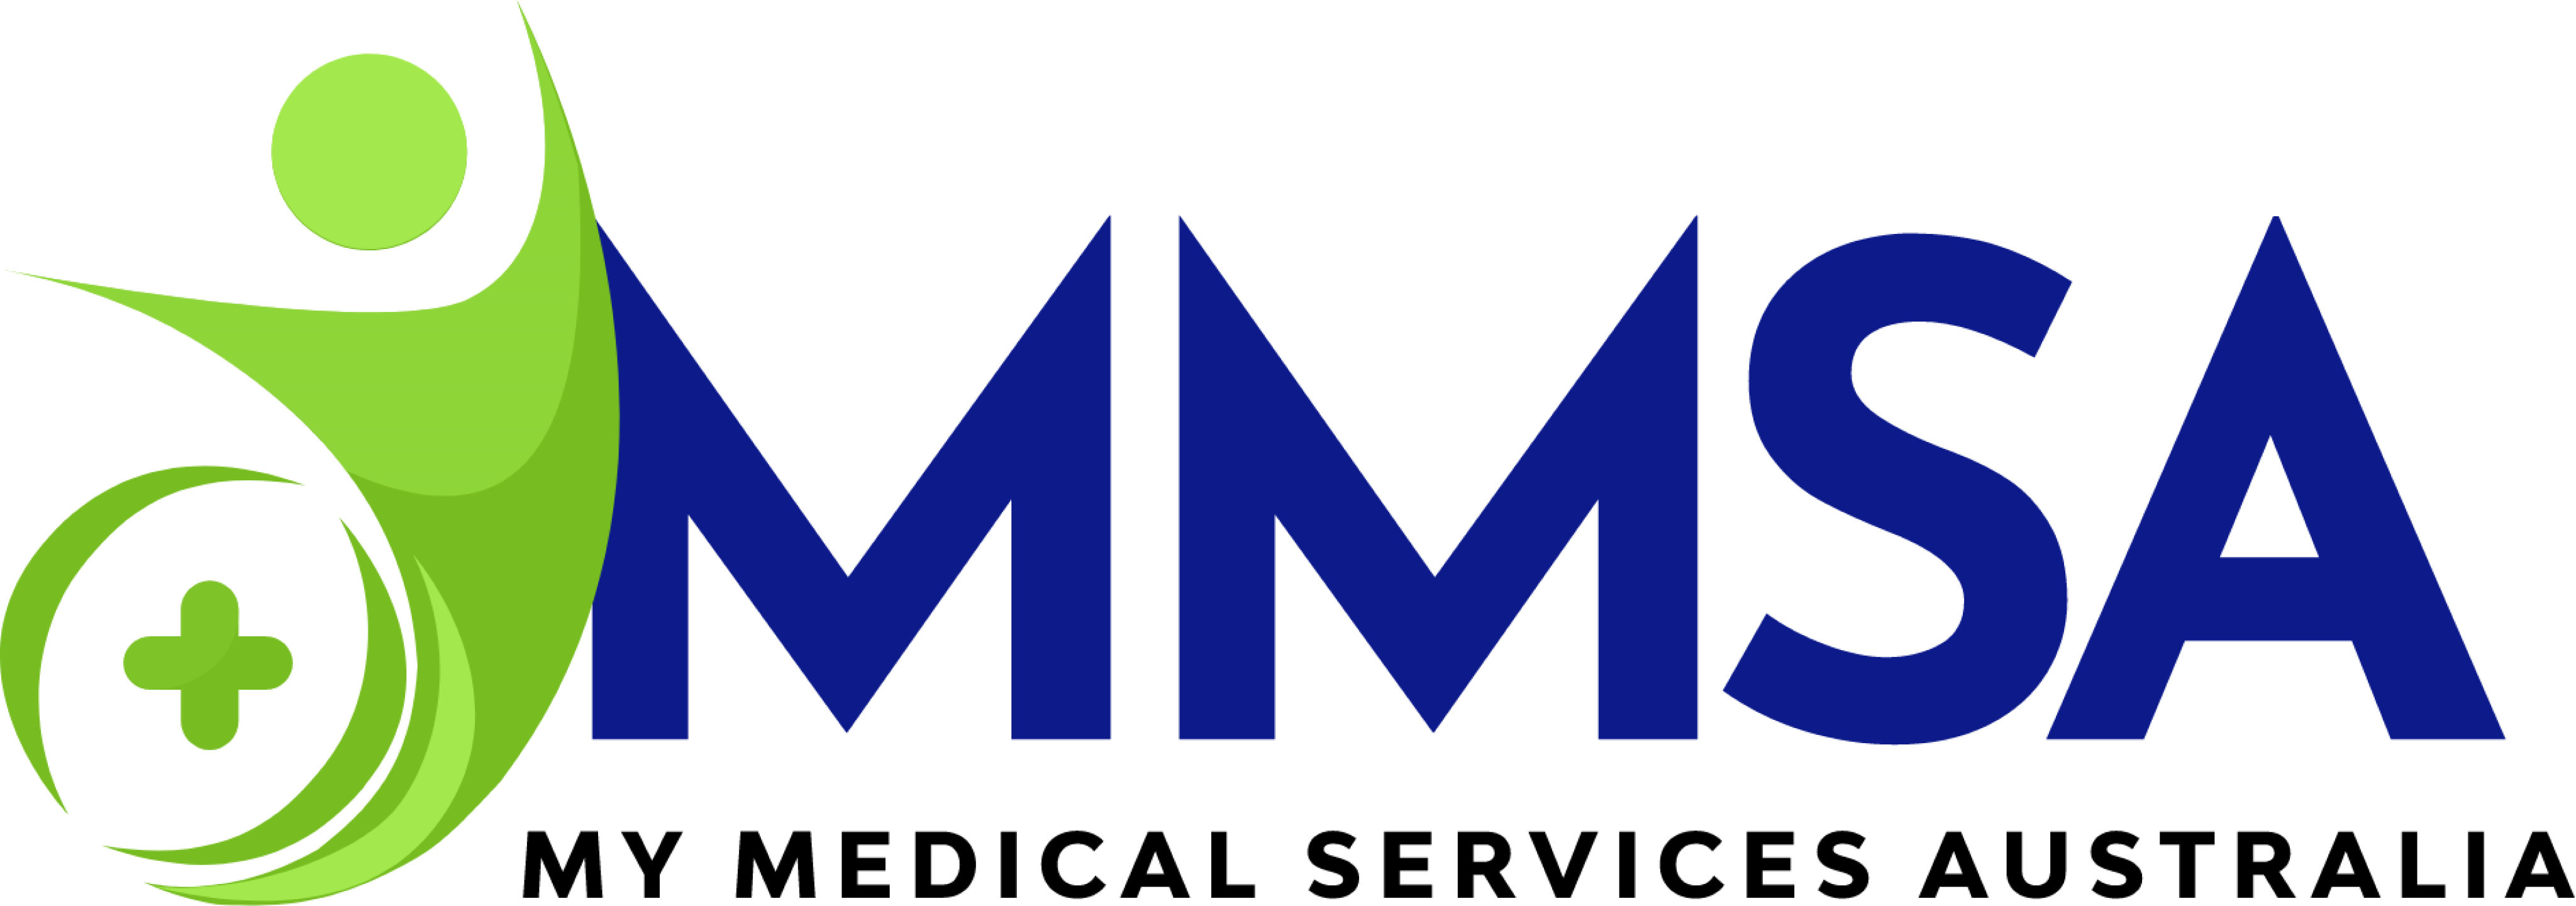 My Medical Services Australia Logo